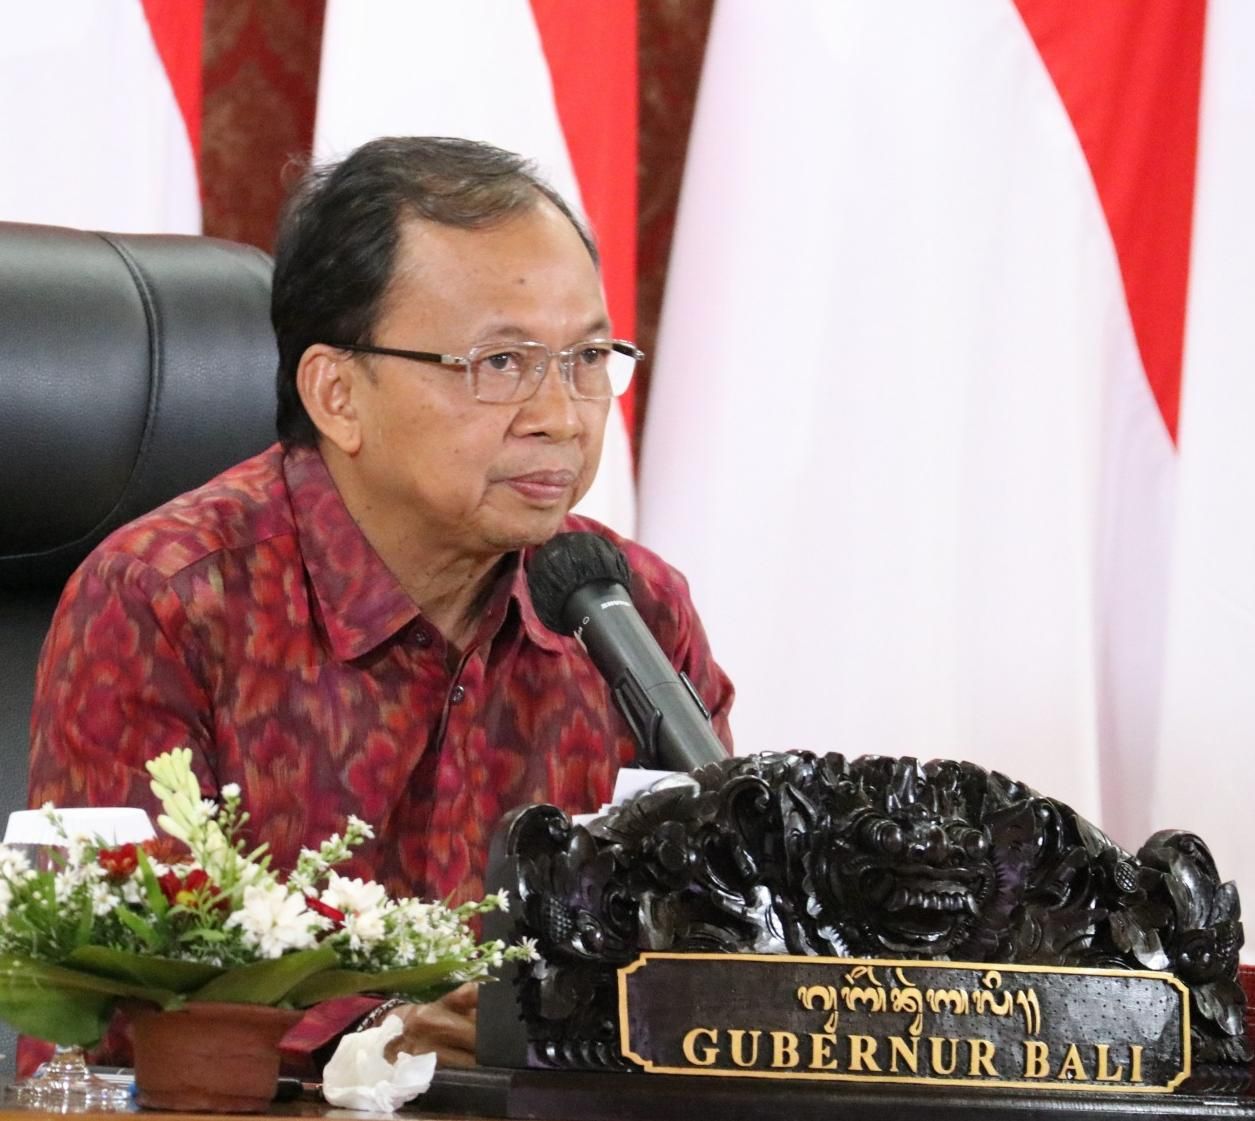 Gubernur Bali Wayan Koster - Arak, Brem, Tuak Bali sah diproduksi